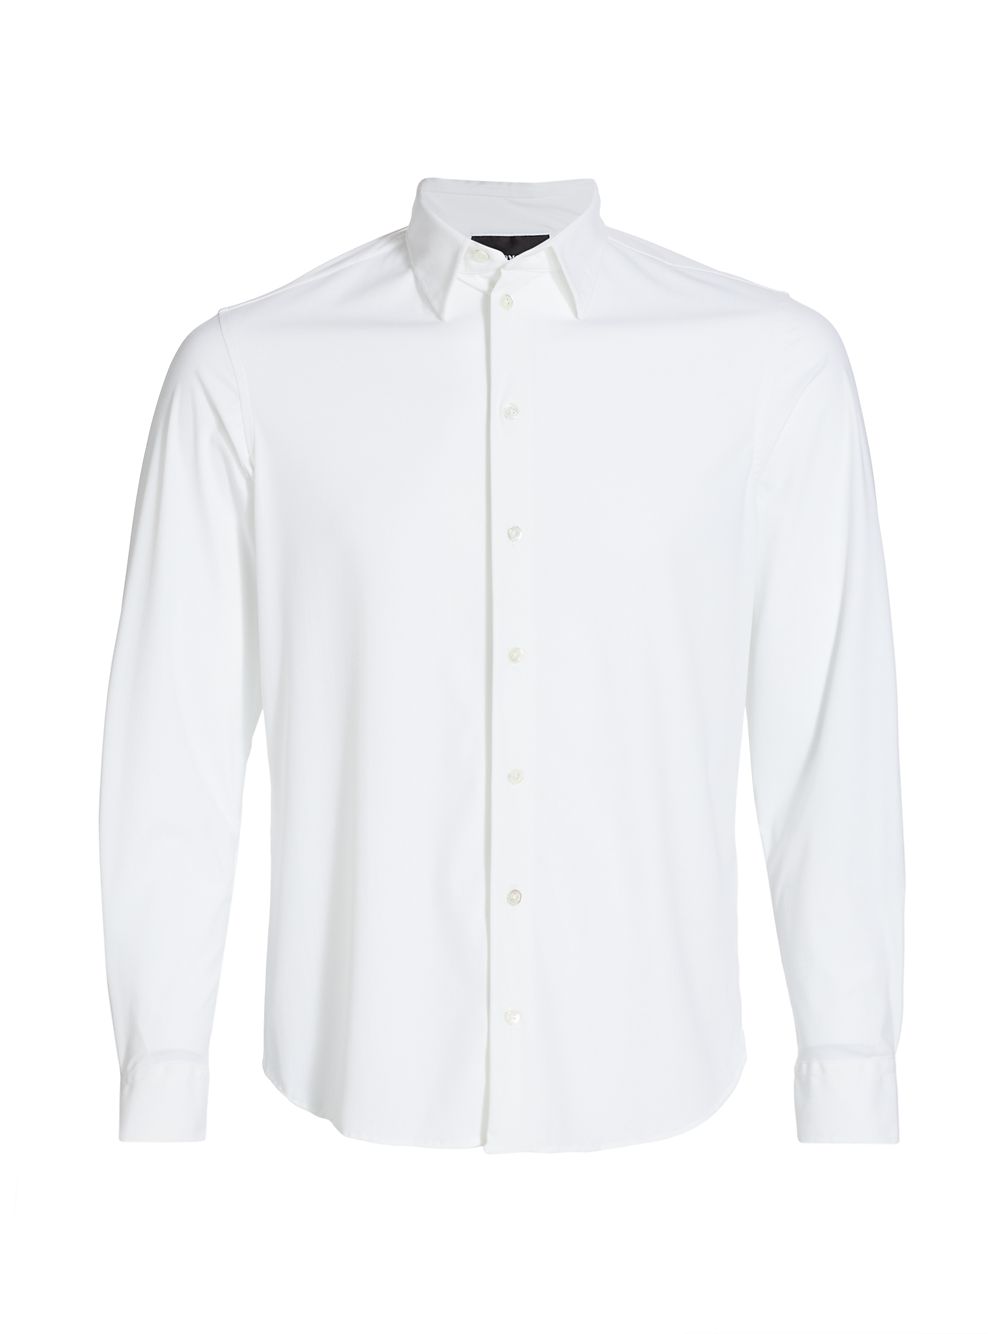 Рубашка из эластичного поплина Emporio Armani, белый рубашка из эластичного поплина zara белый